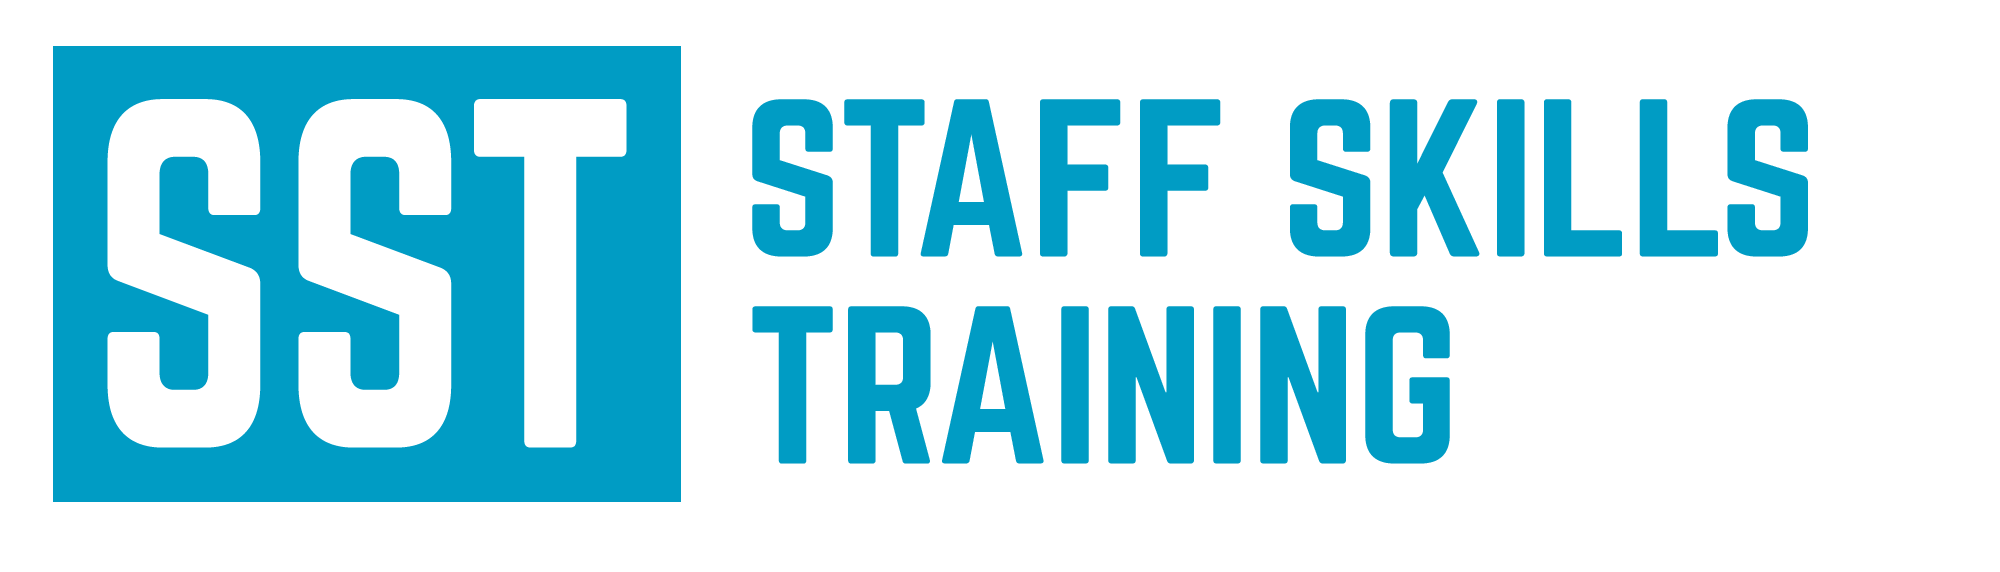 Staff Skills Academy